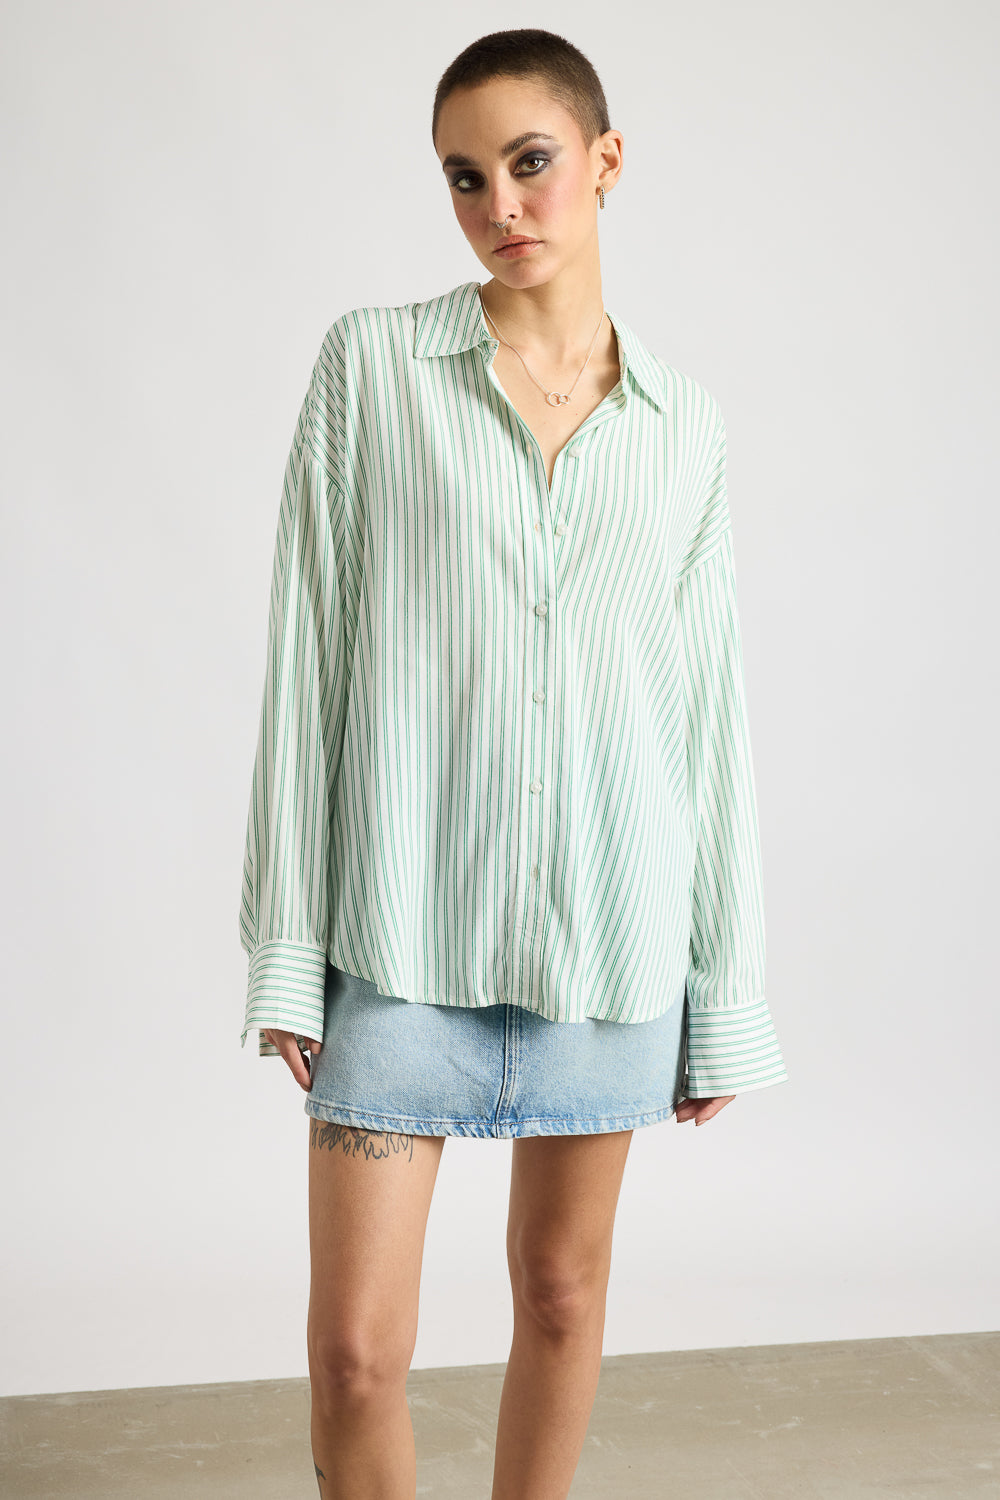 Women's Relaxed Fit Shirt - Green Stripes